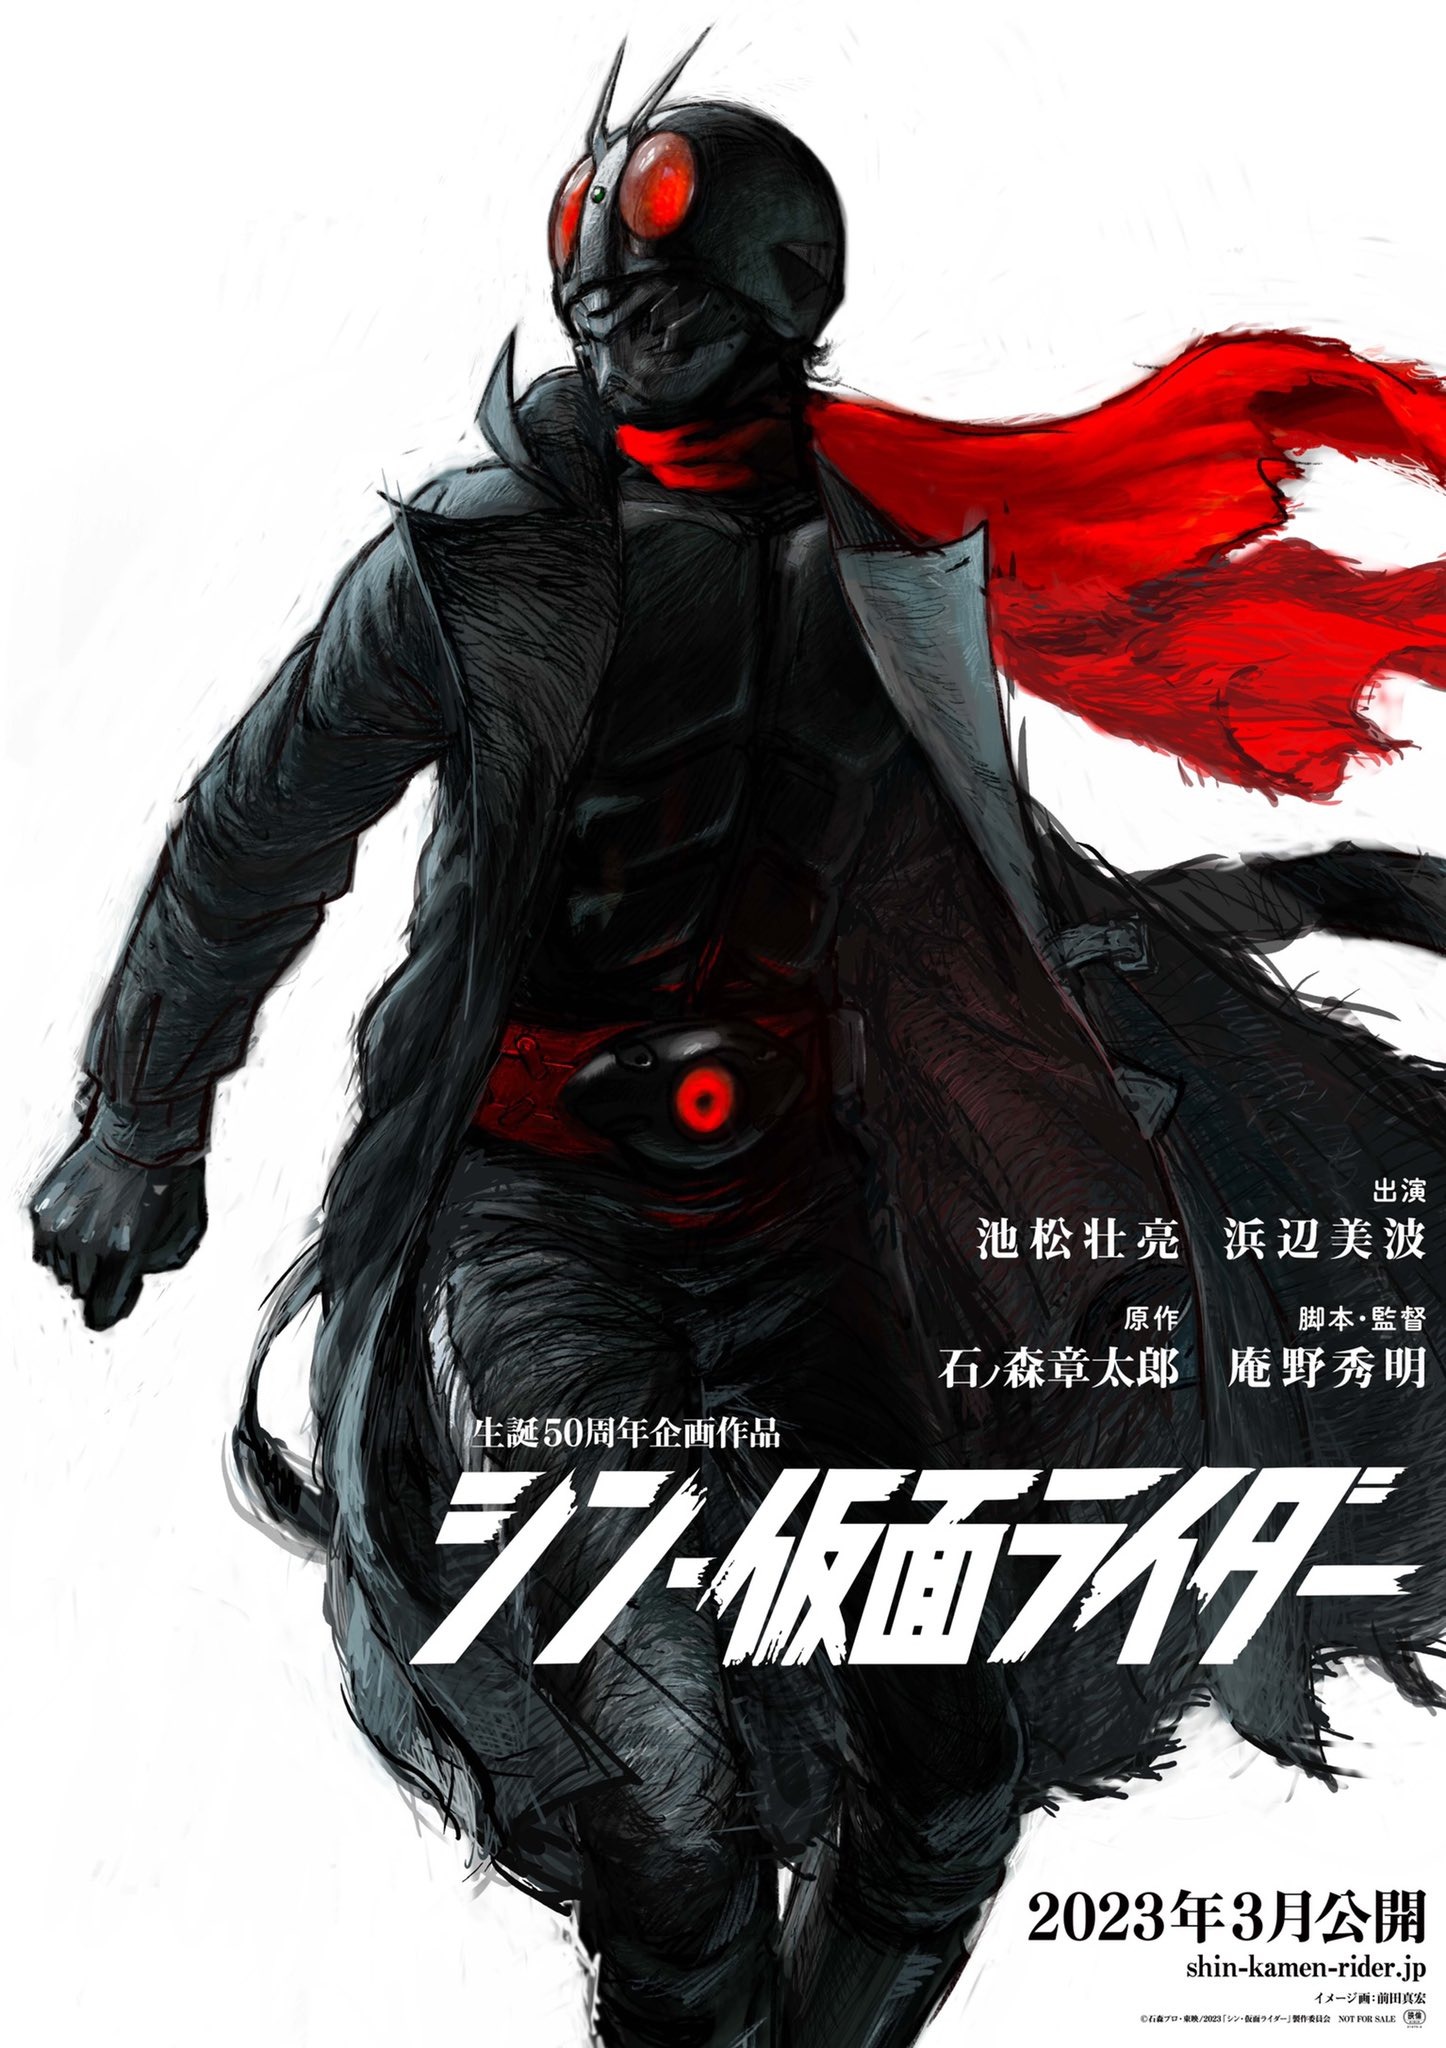 Mega Sized Movie Poster Image for Shin Kamen Rider (#4 of 4)